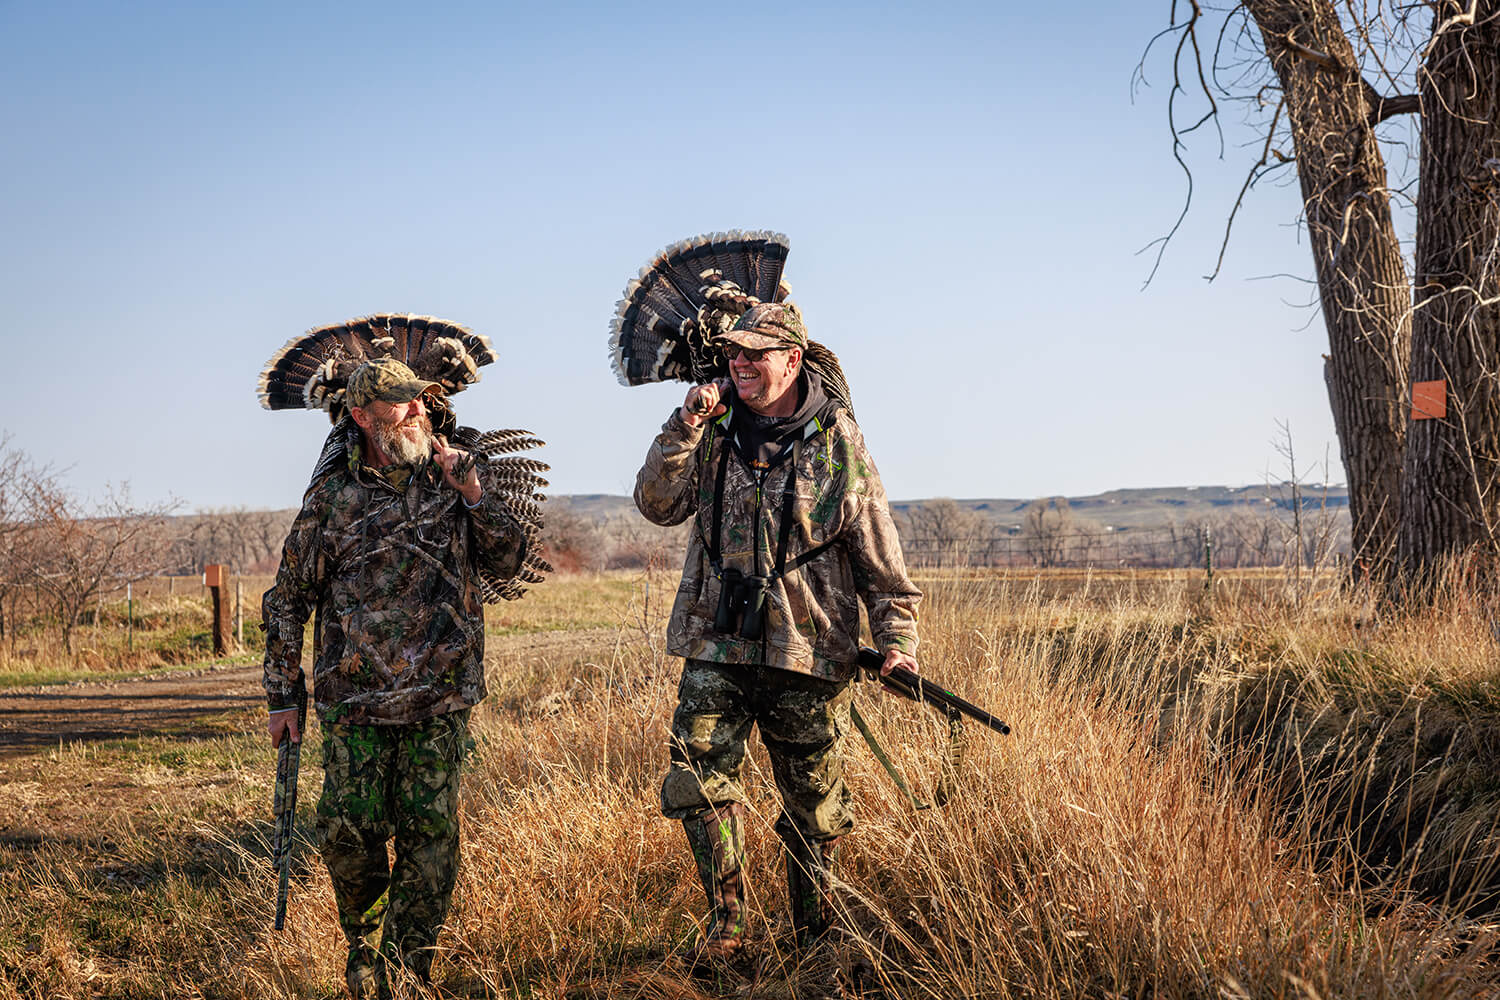 Hunters return from a successful turkey hunt in Montana.